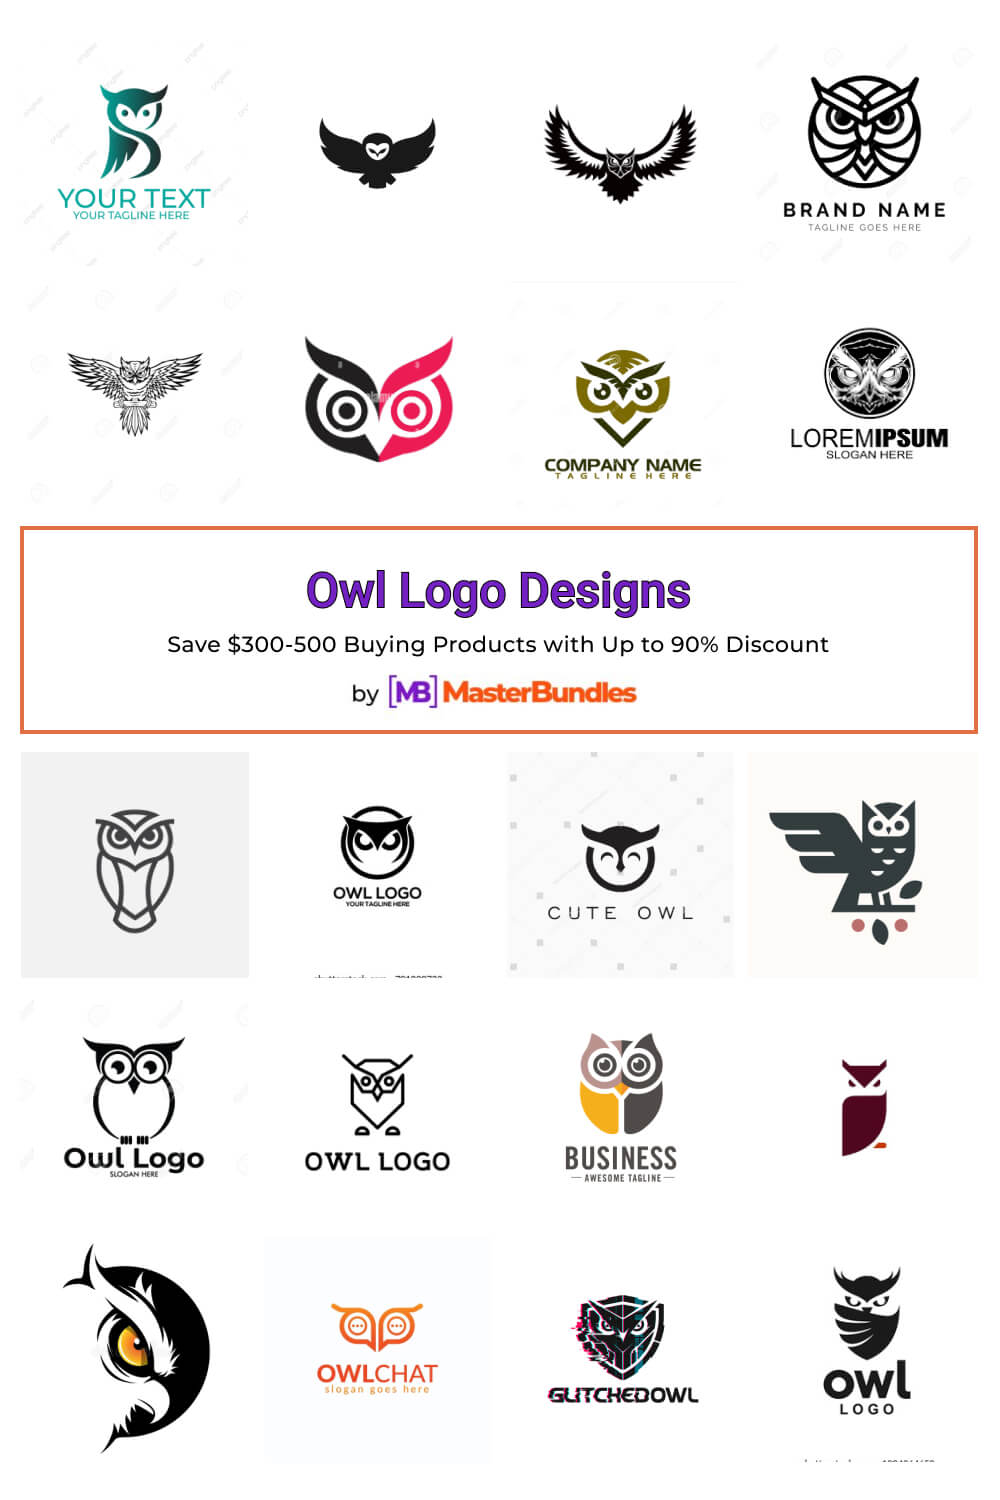 owl logo designs pinterest image.